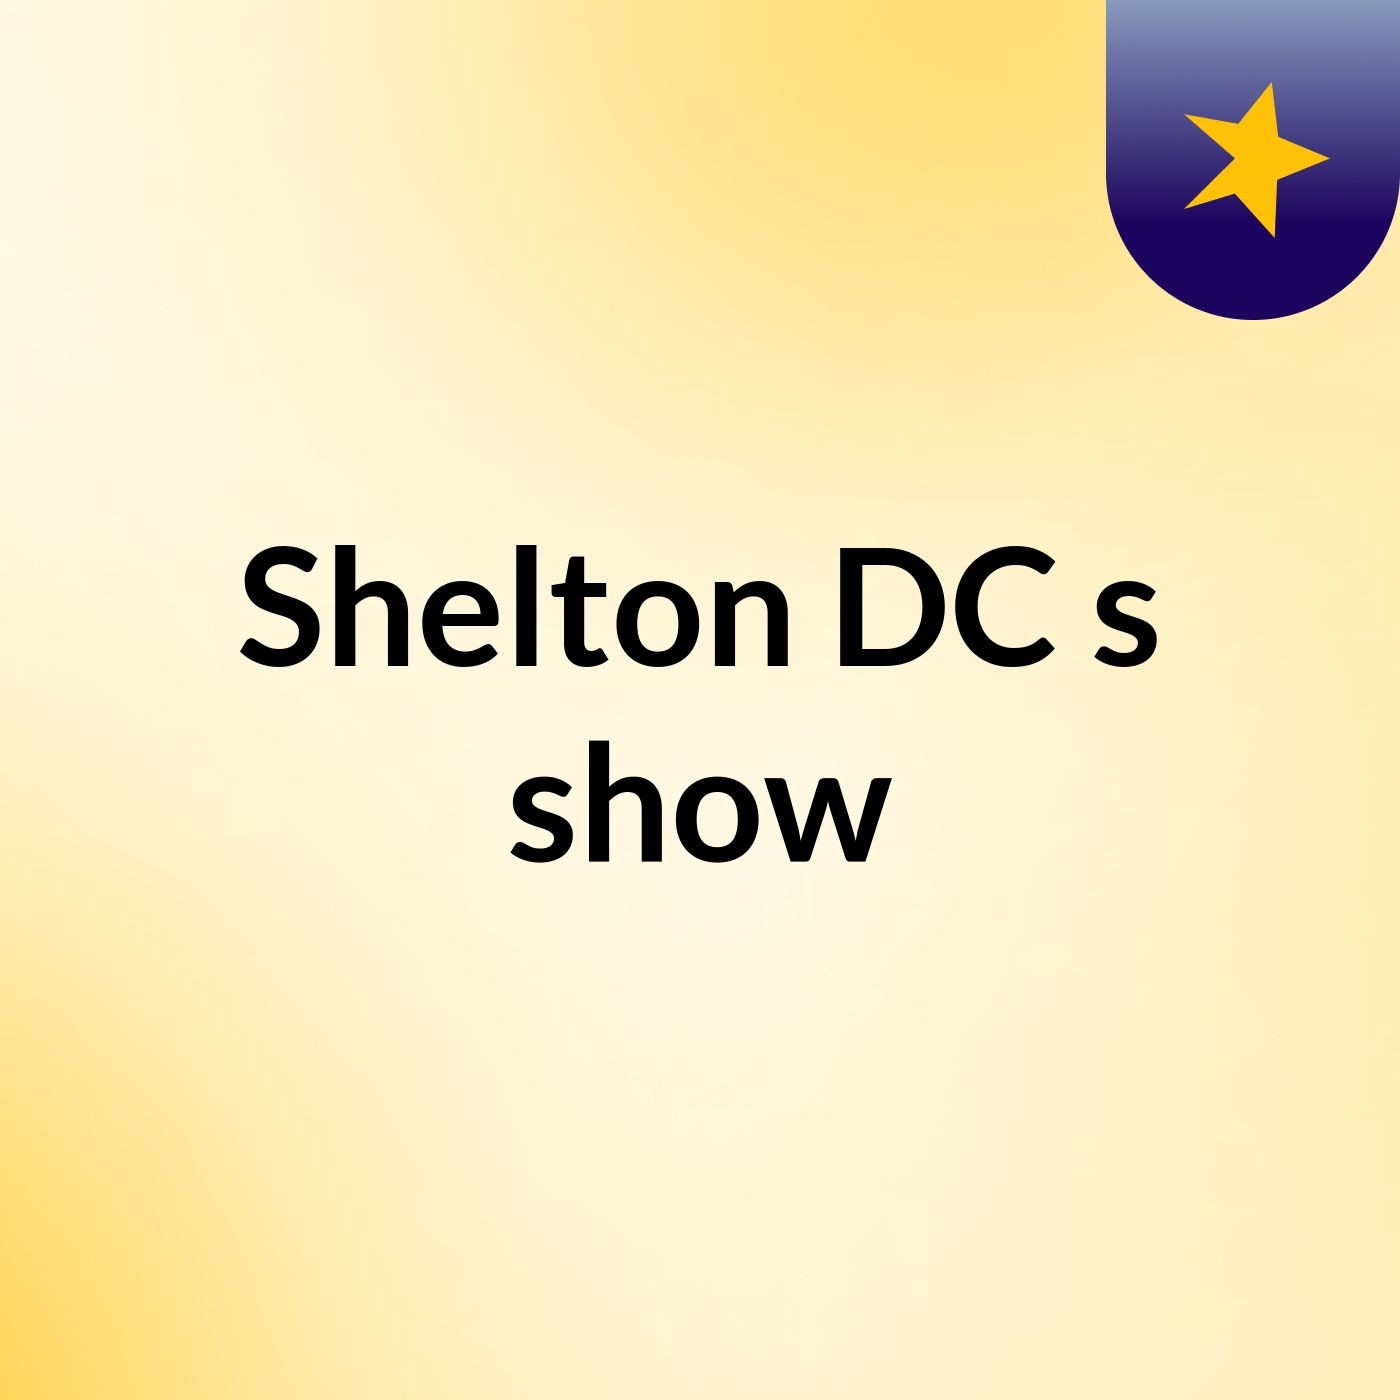 Shelton DC's show